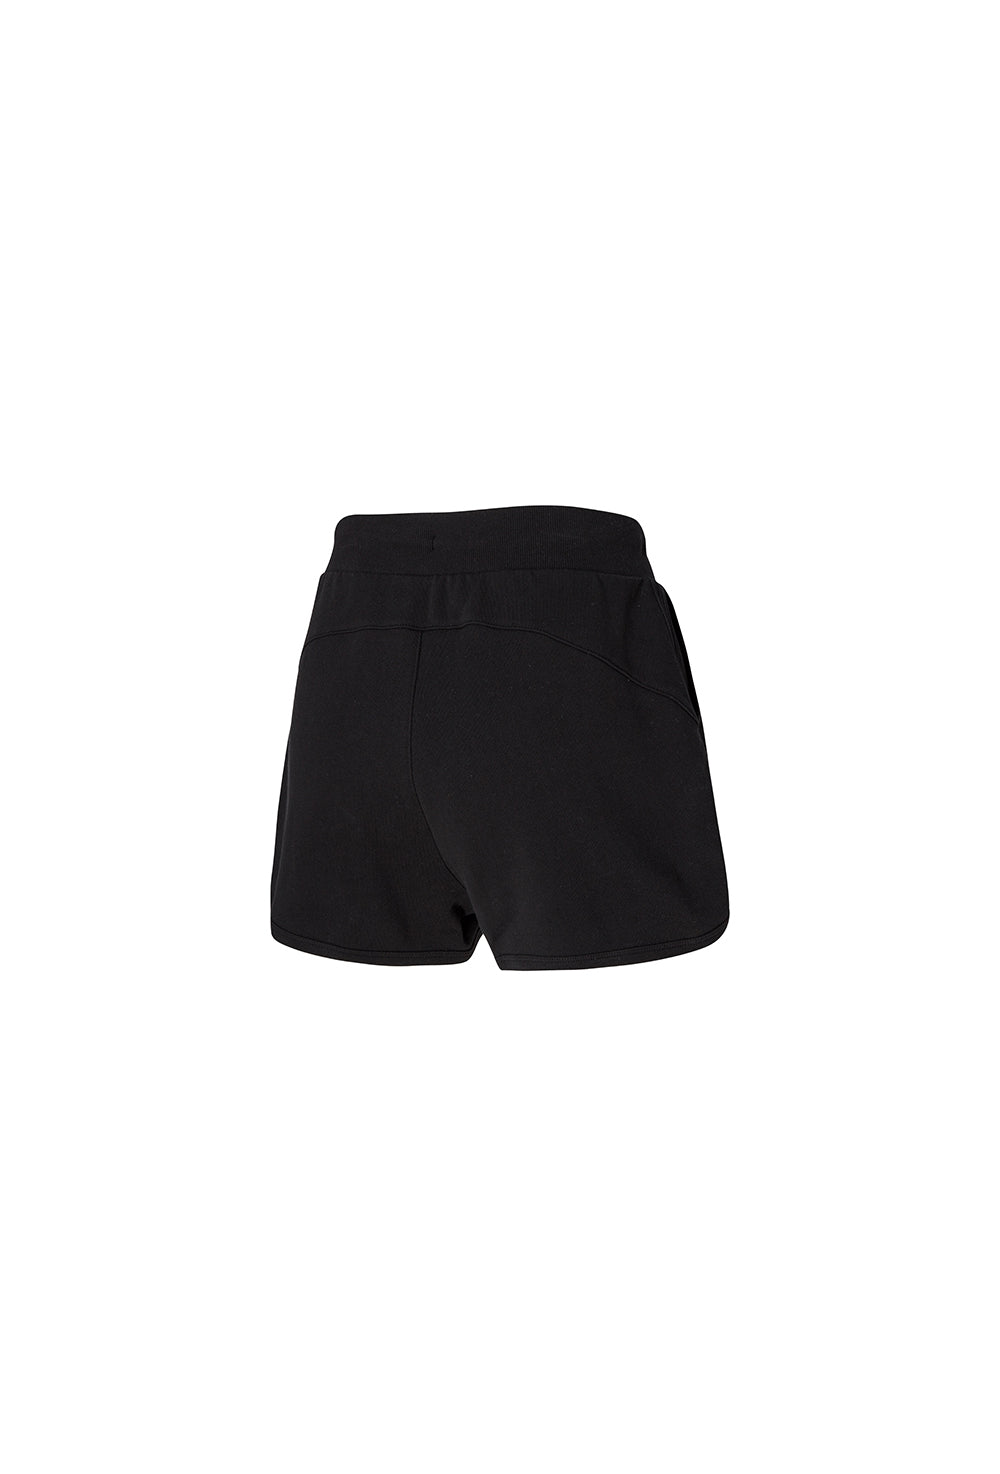 XXMX Daily Cotton Shorts - Black